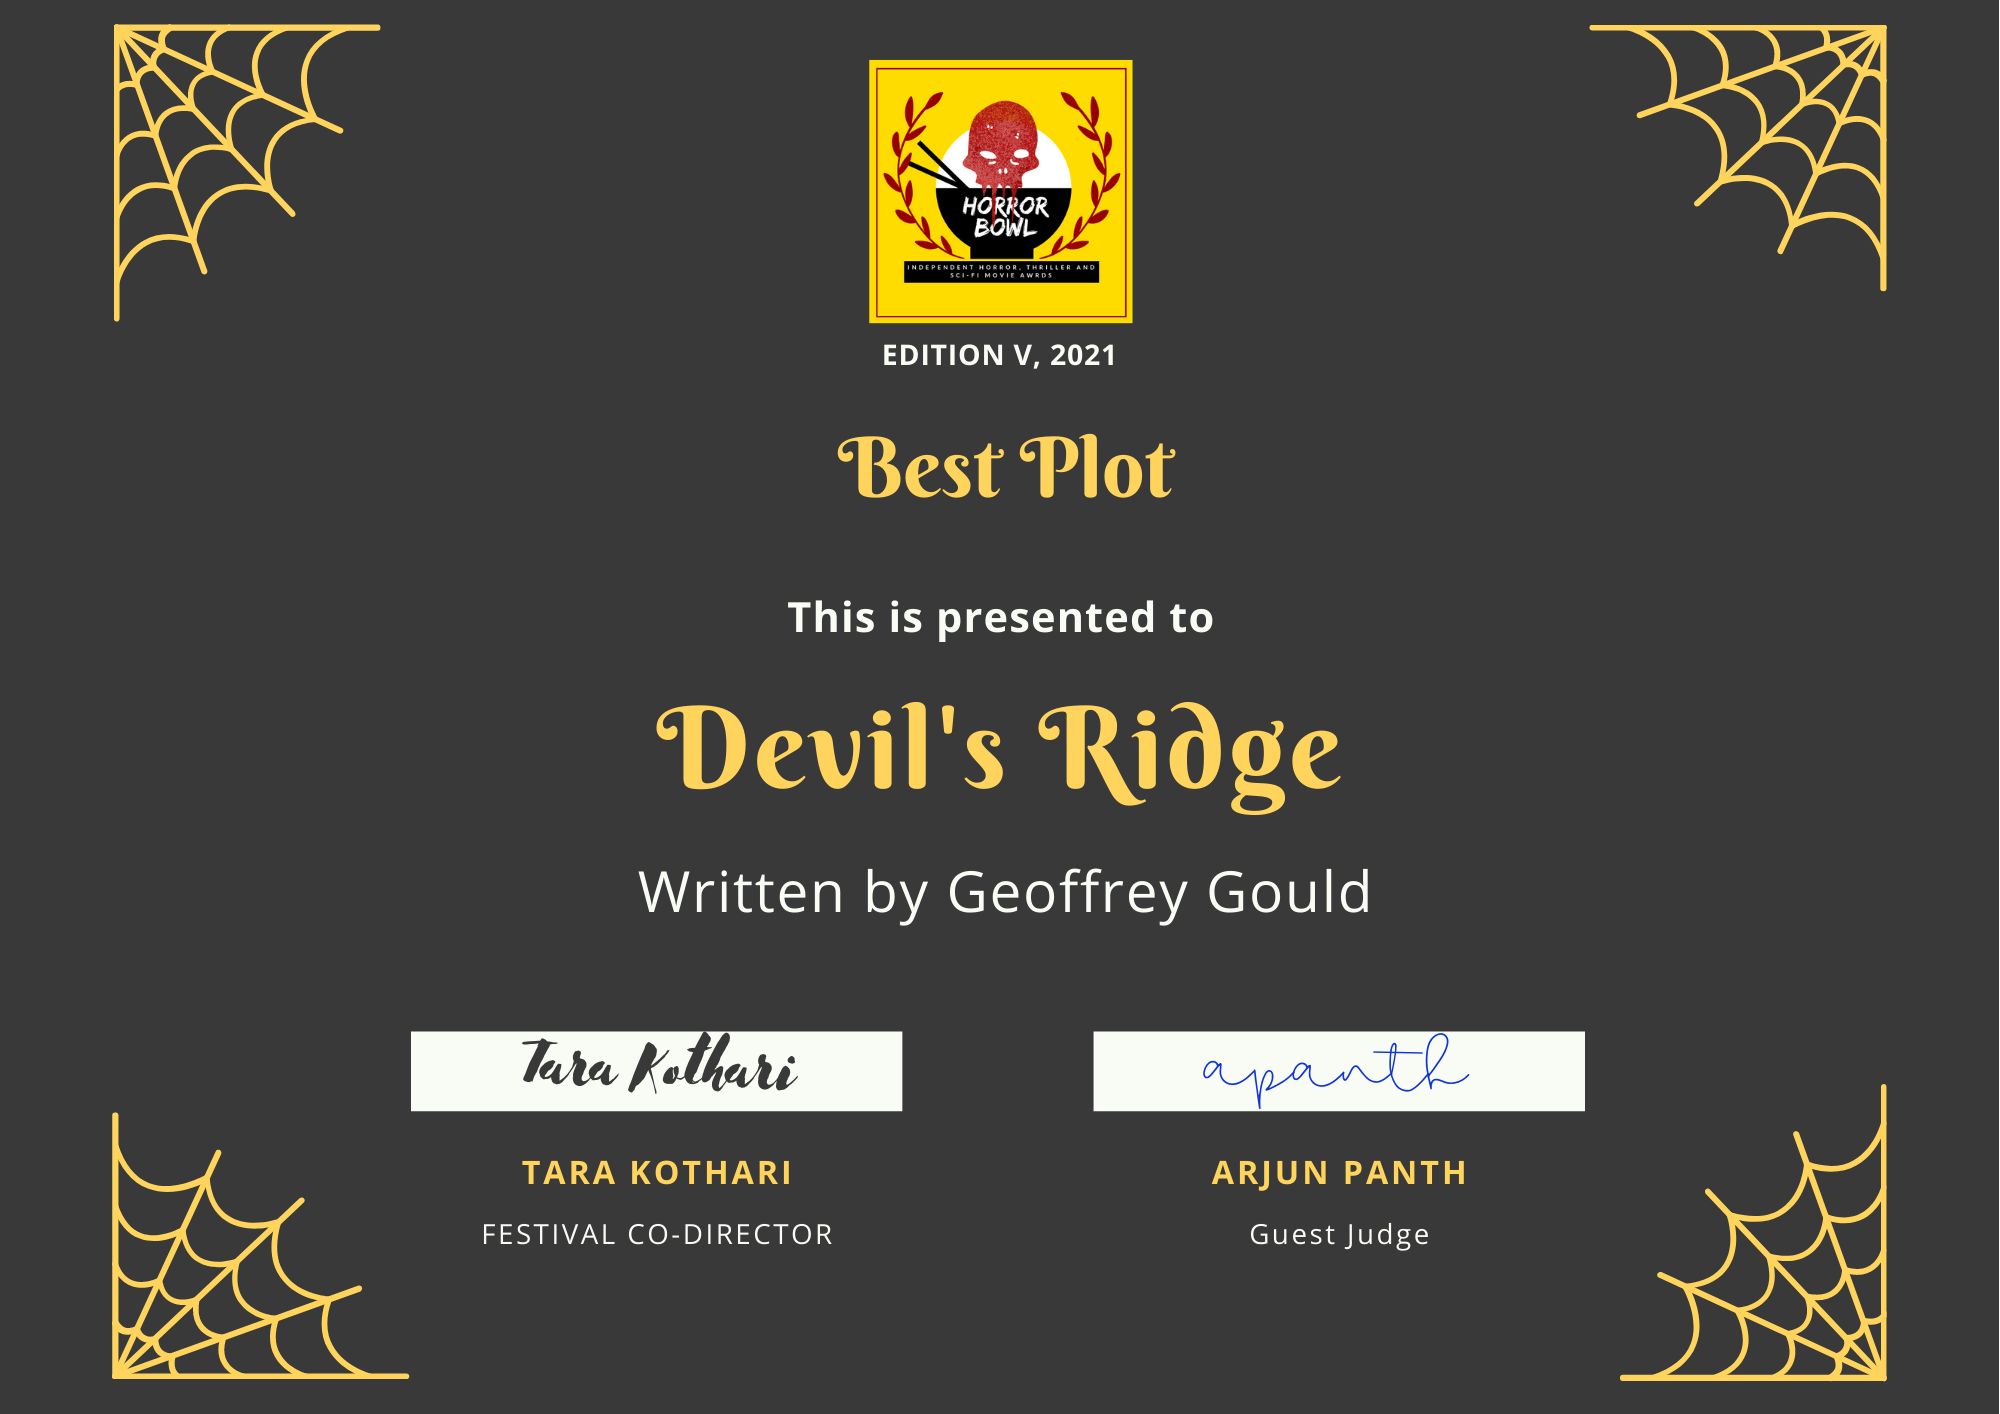 Devil's Ridge Win Certificate